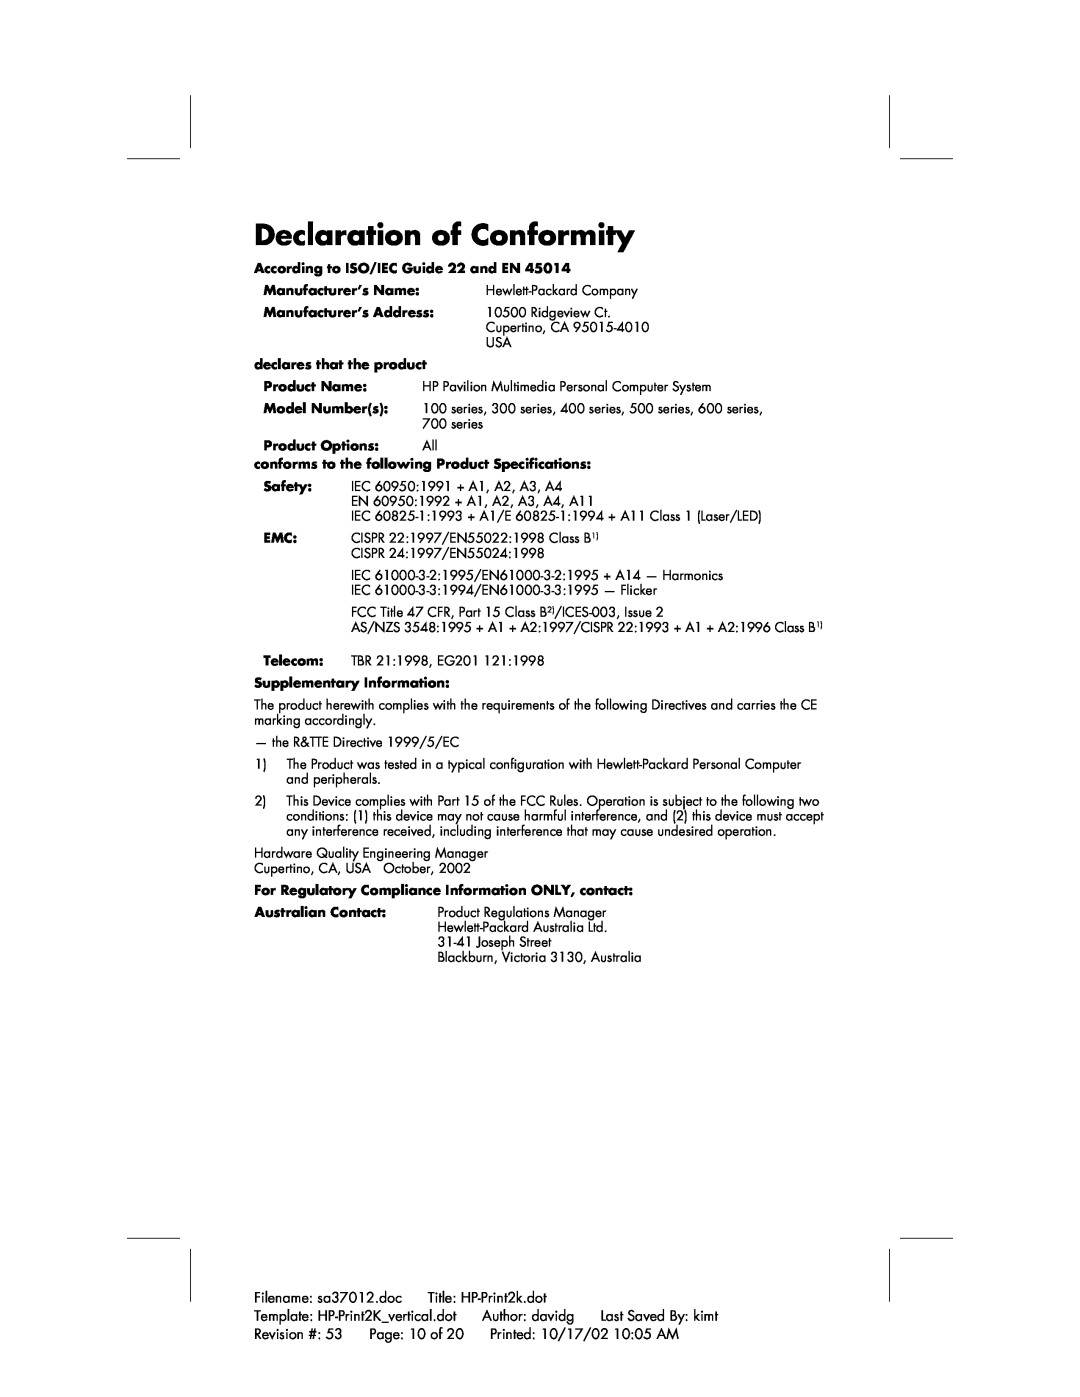 HP 704d (AP) manual Declaration of Conformity, Filename sa37012.doc, Title HP-Print2k.dot, Template HP-Print2Kvertical.dot 